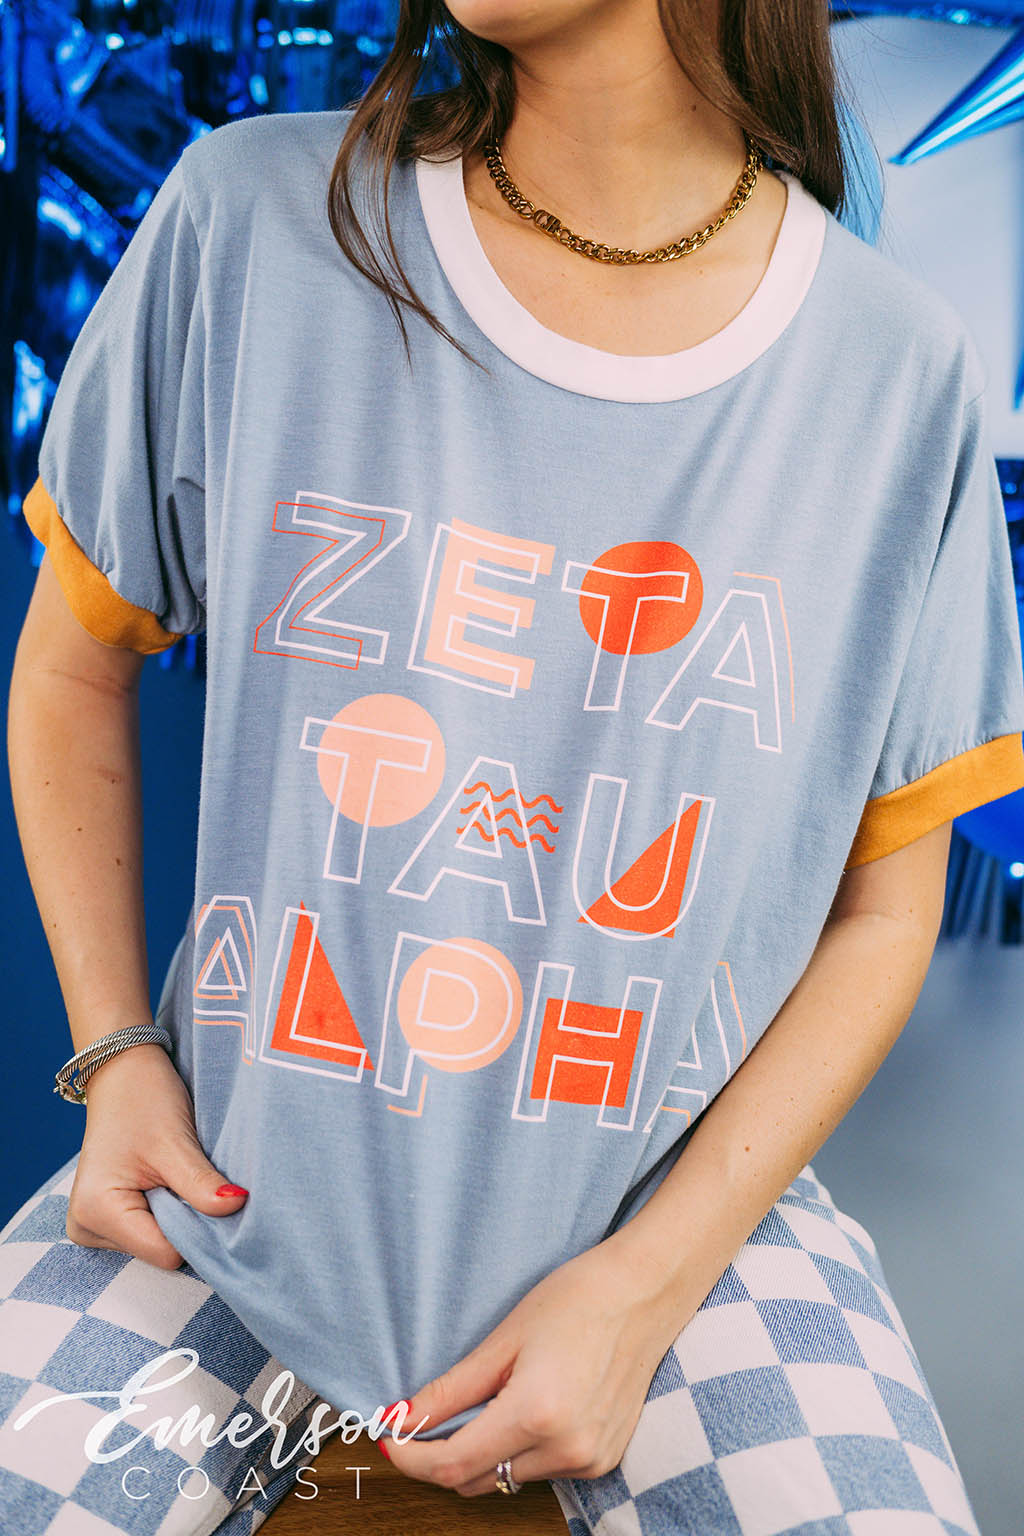 Zeta Tau Alpha Recruitment Abstract Ringer Tee